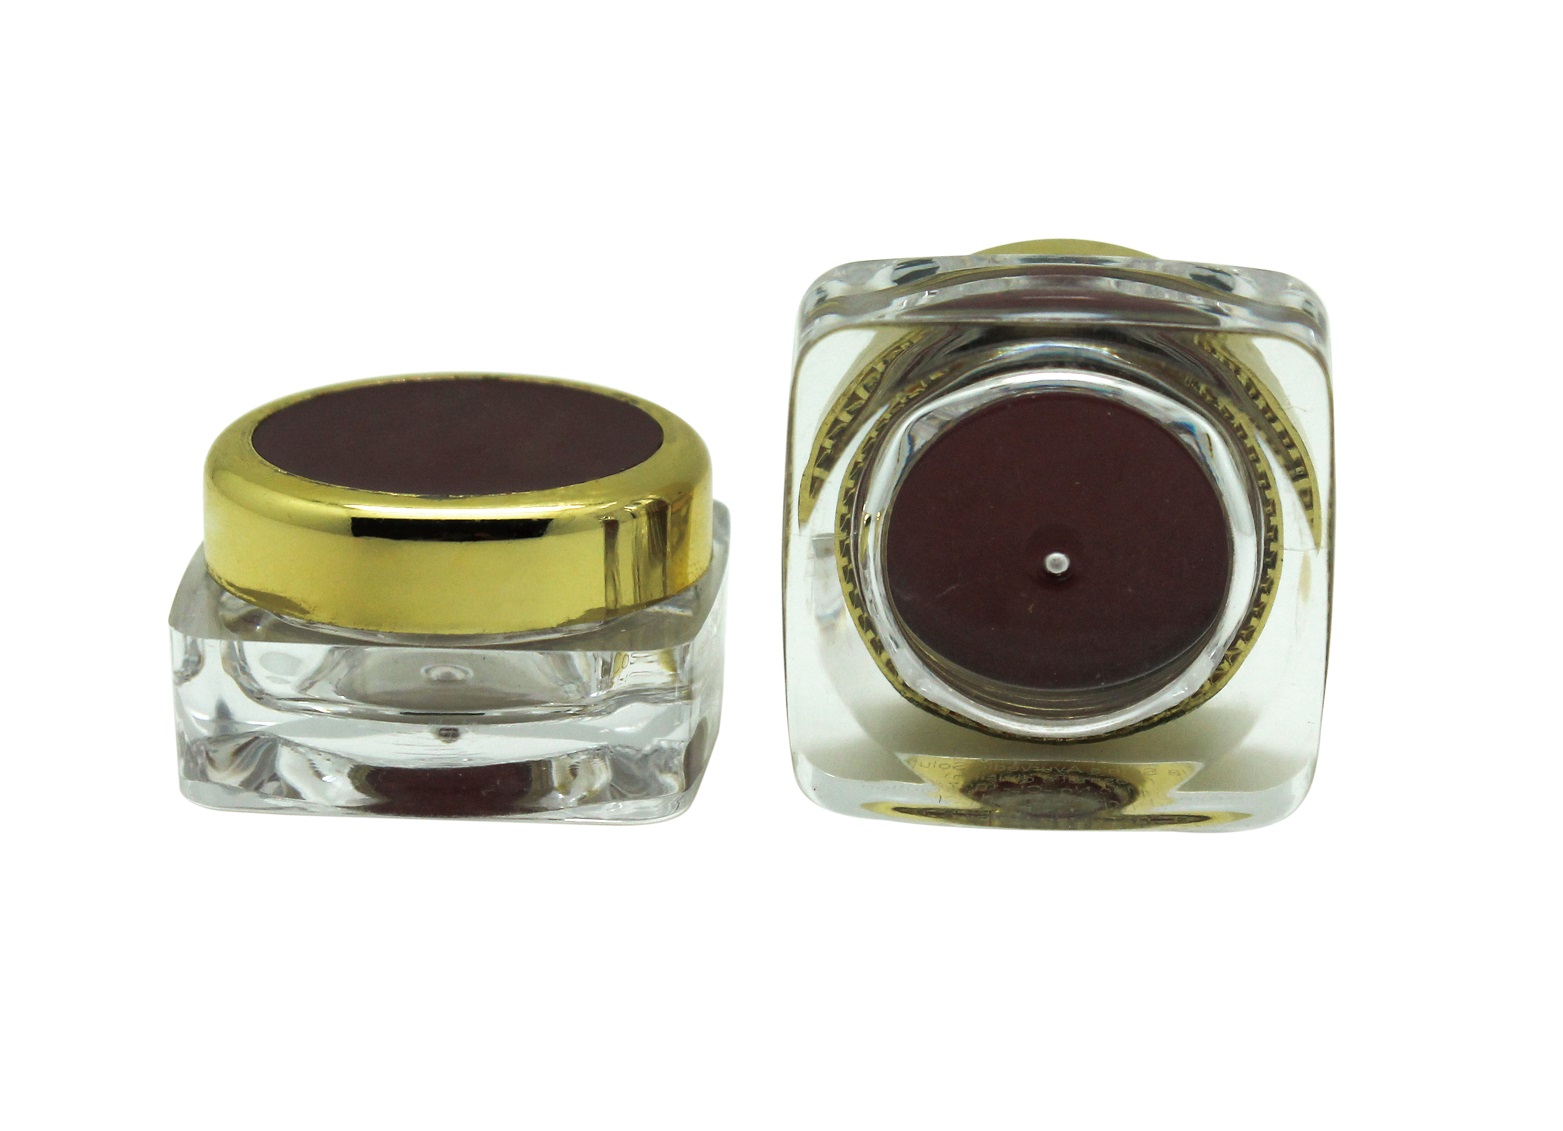 Wholesale cosmetics jar luxury square shape 5g cream jar travel size sample cream jar G2004